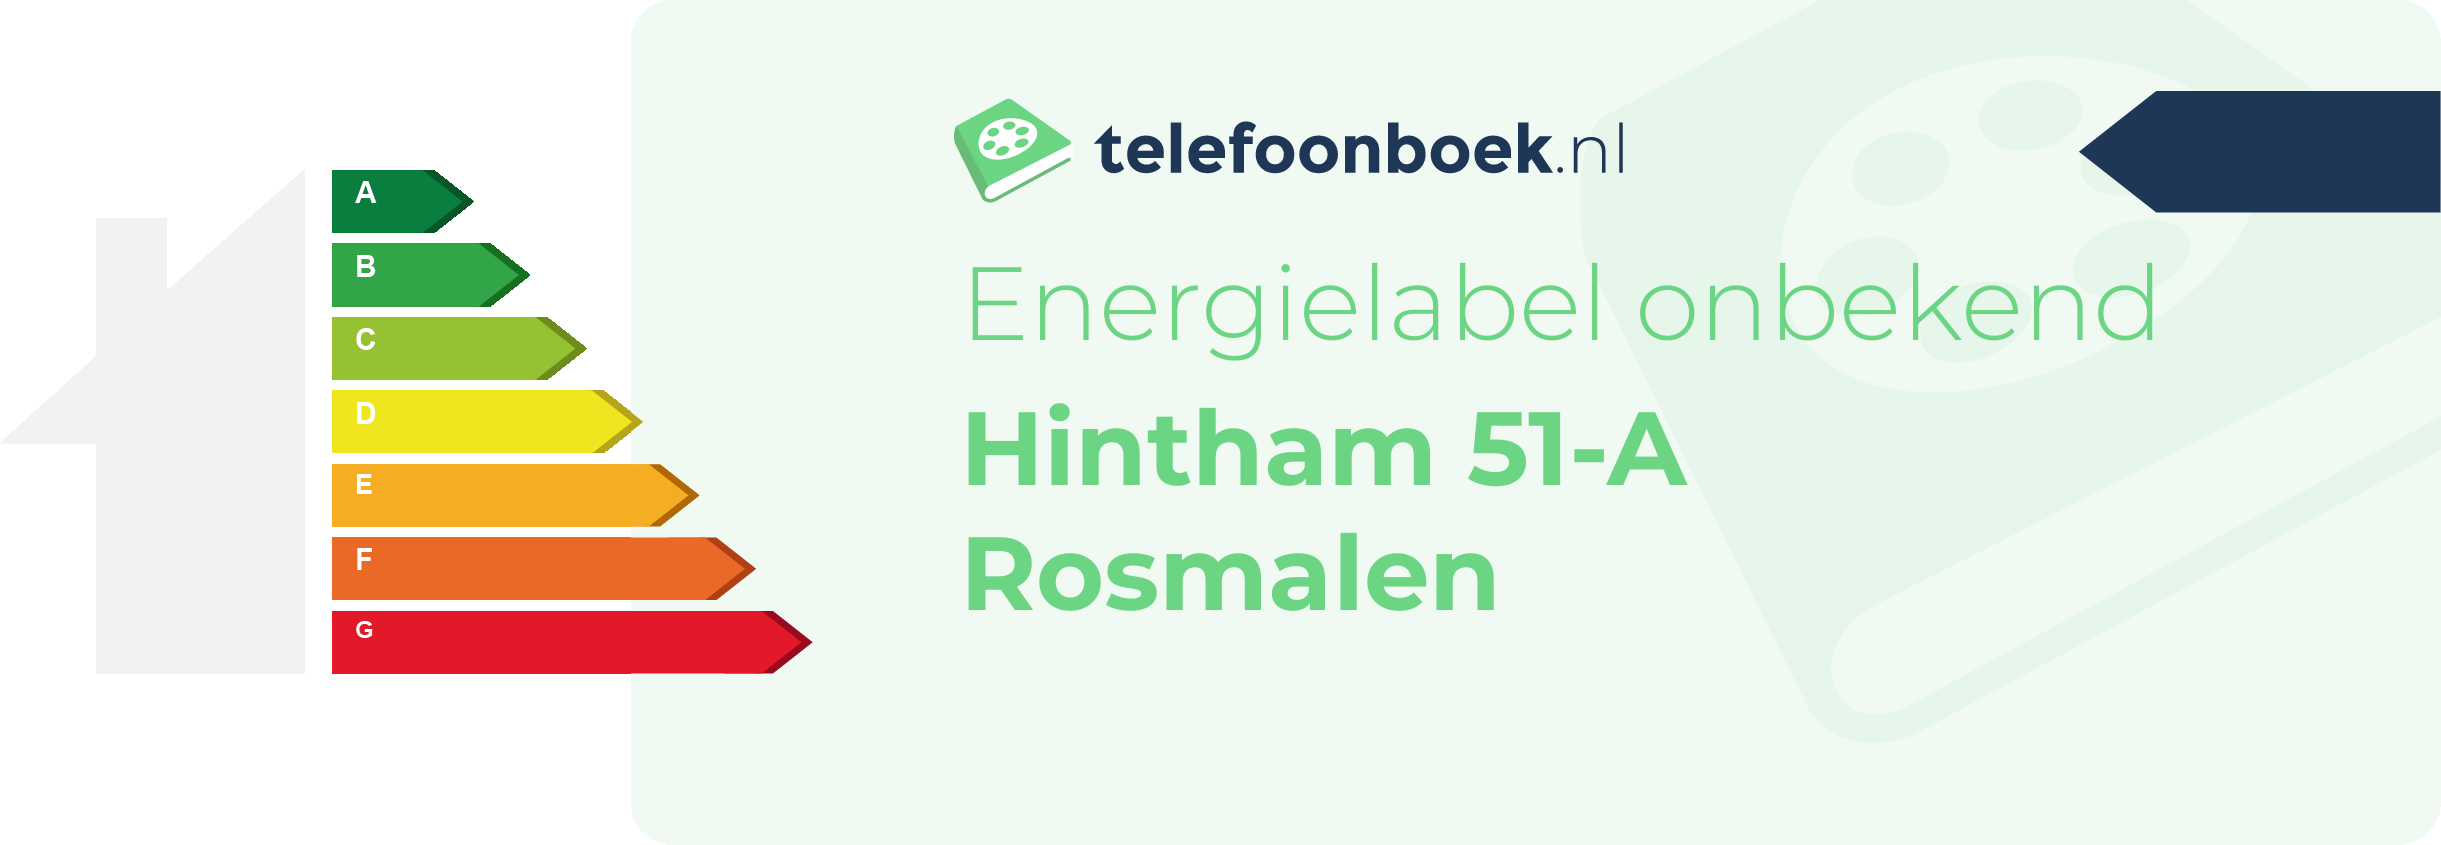 Energielabel Hintham 51-A Rosmalen